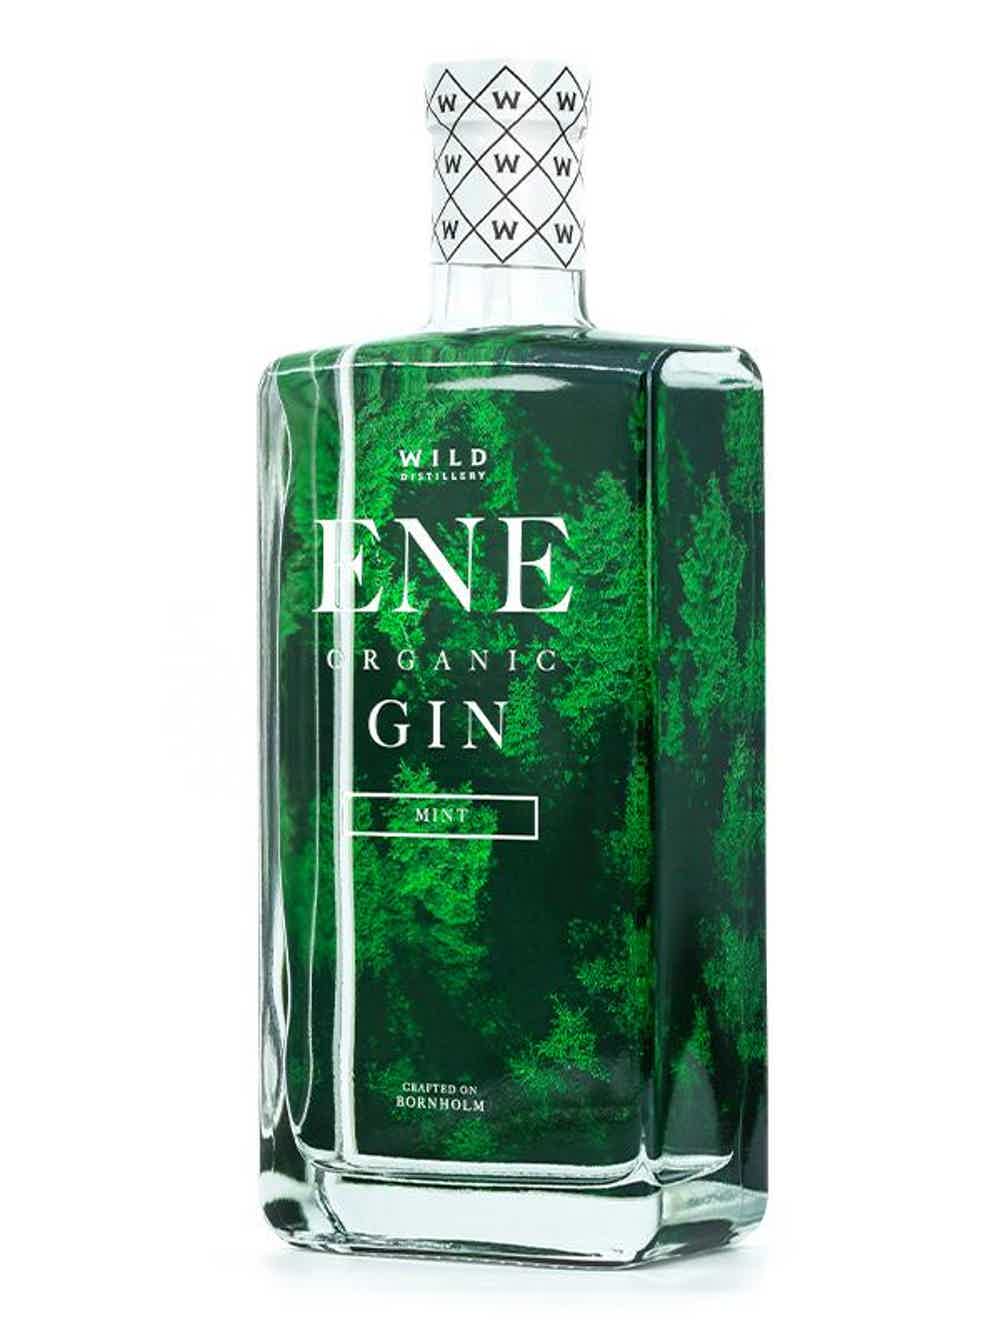  ENE Organic Gin - Mint 70 cl 40%